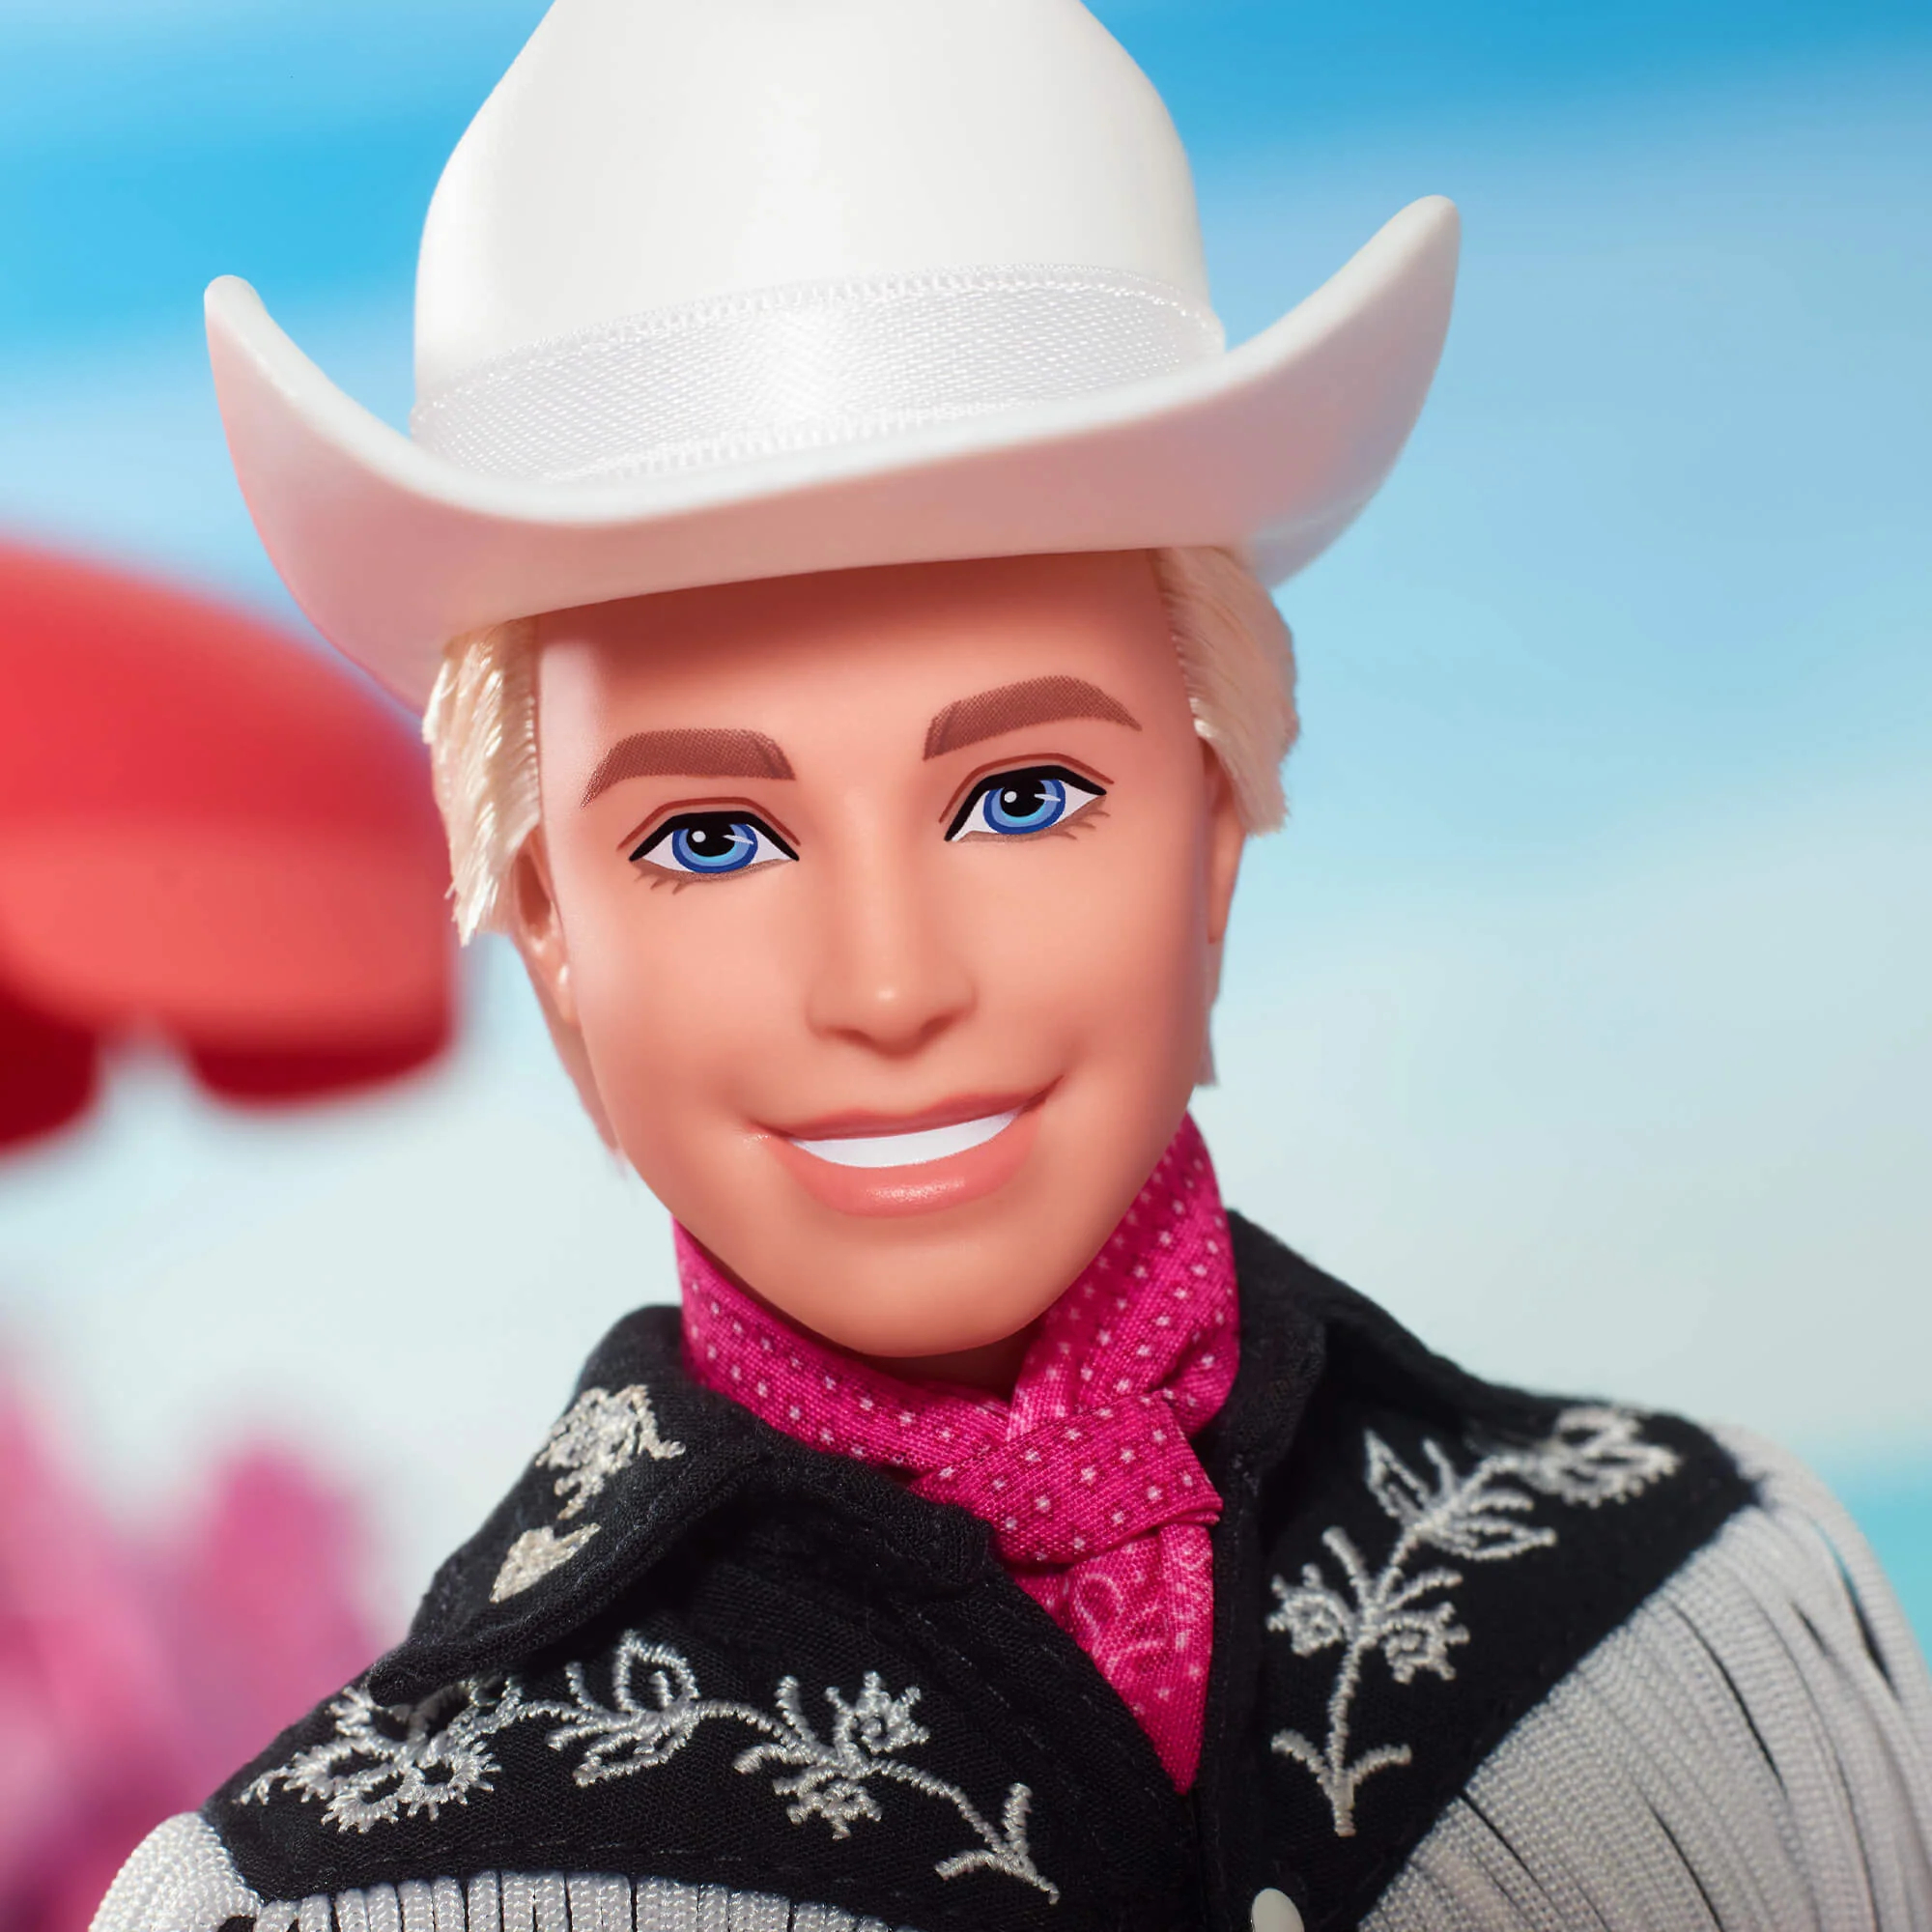 Barbie 2023 Barbie the Movie Ken Western Outfit 